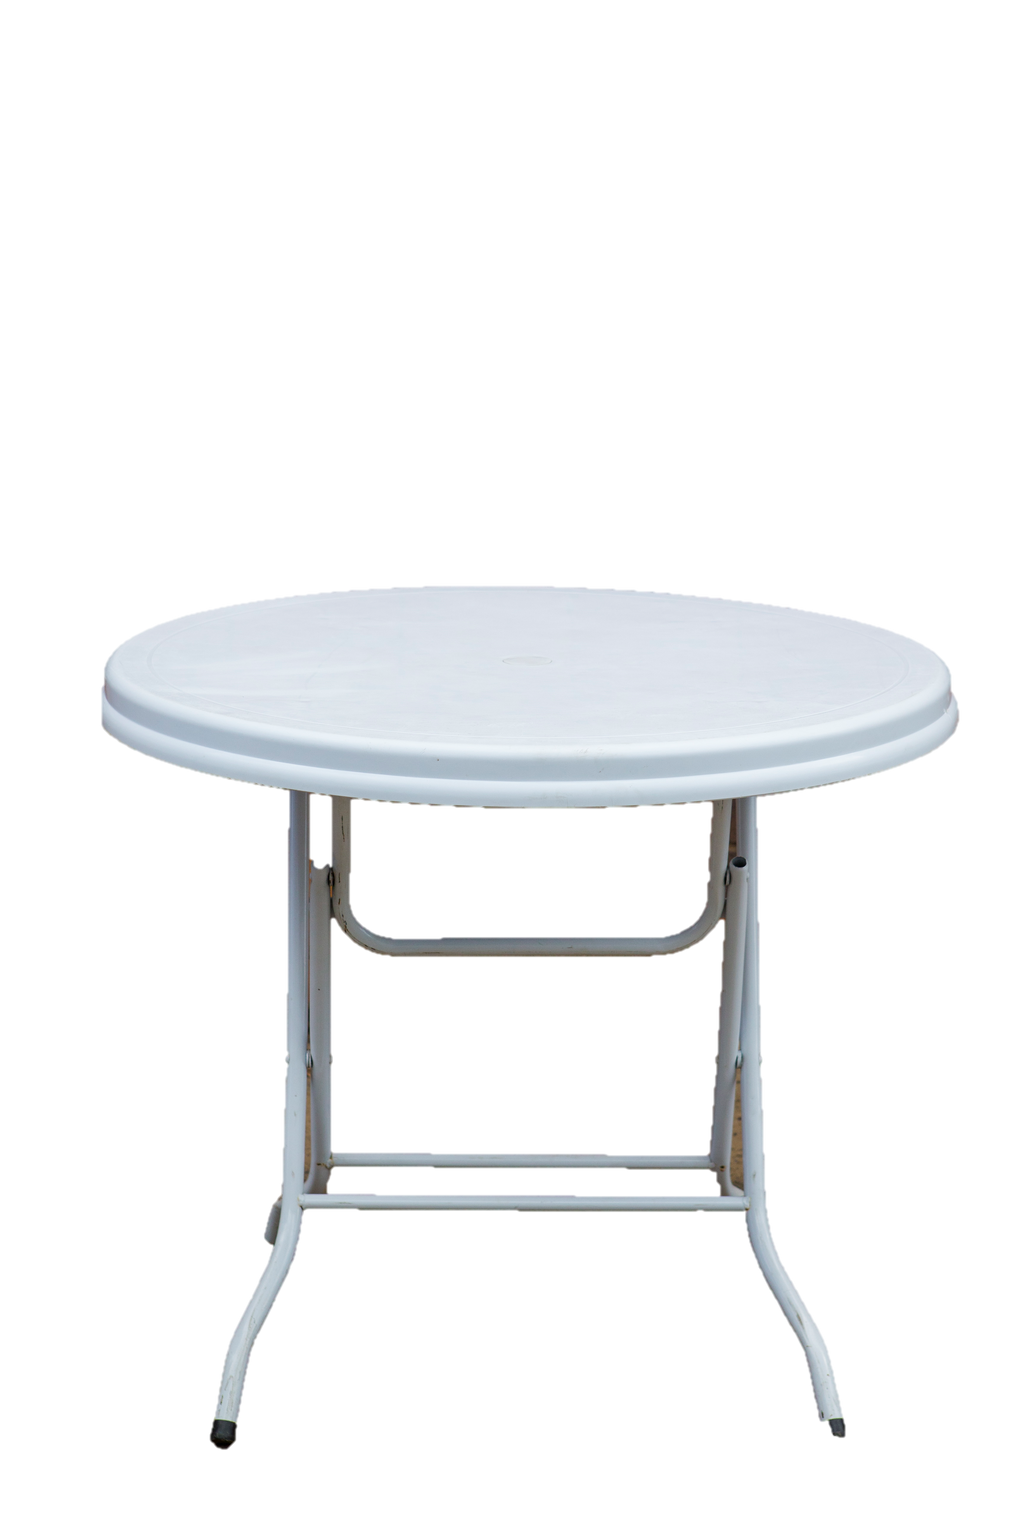 Round 3ft Plastic Table